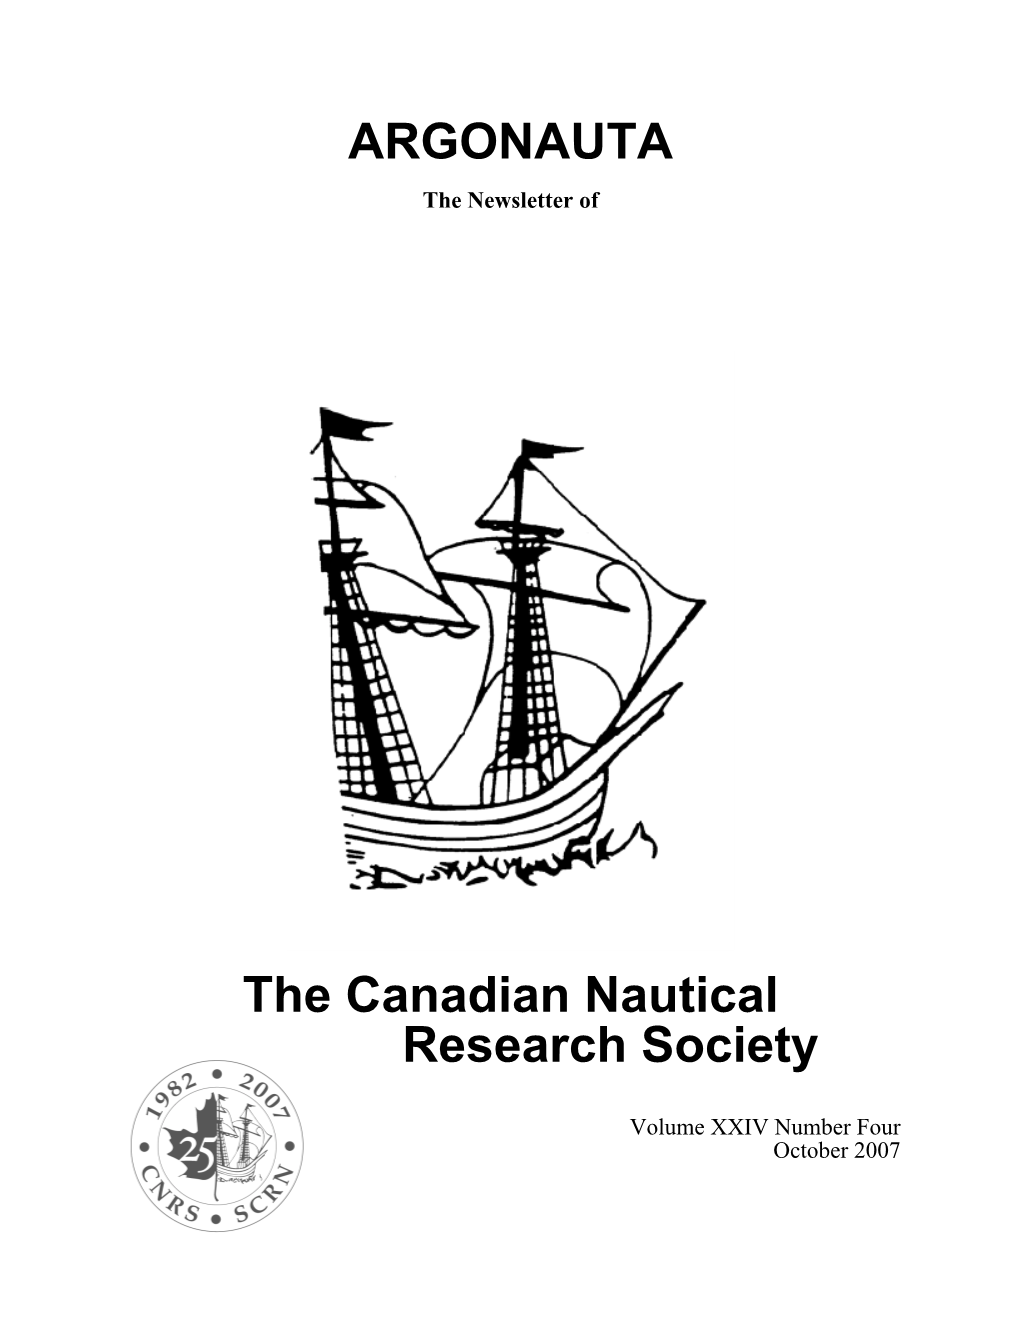 ARGONAUTA the Canadian Nautical Research Society